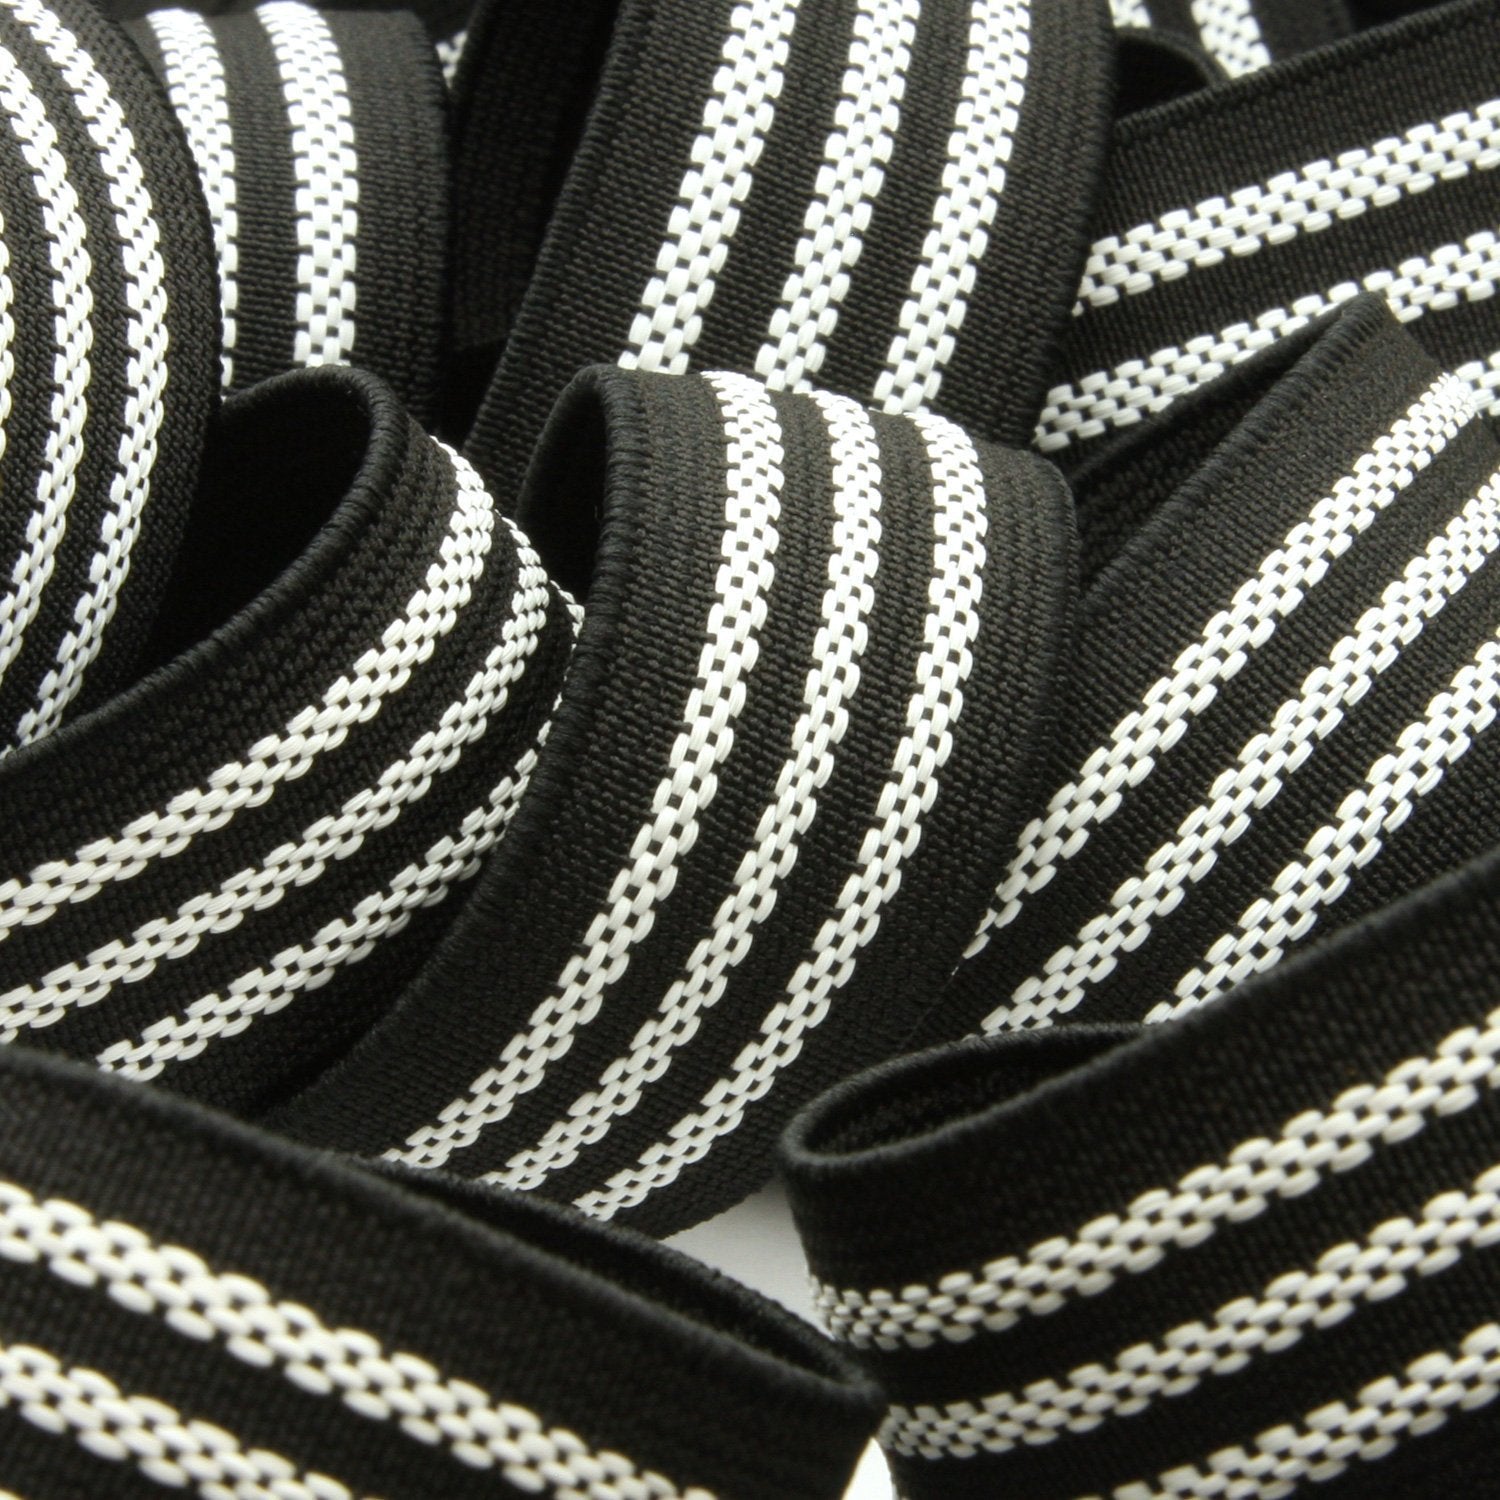 FUJIYAMA RIBBON [Wholesale] Non-Slip Band 25mm Black & White 30 Meters Roll